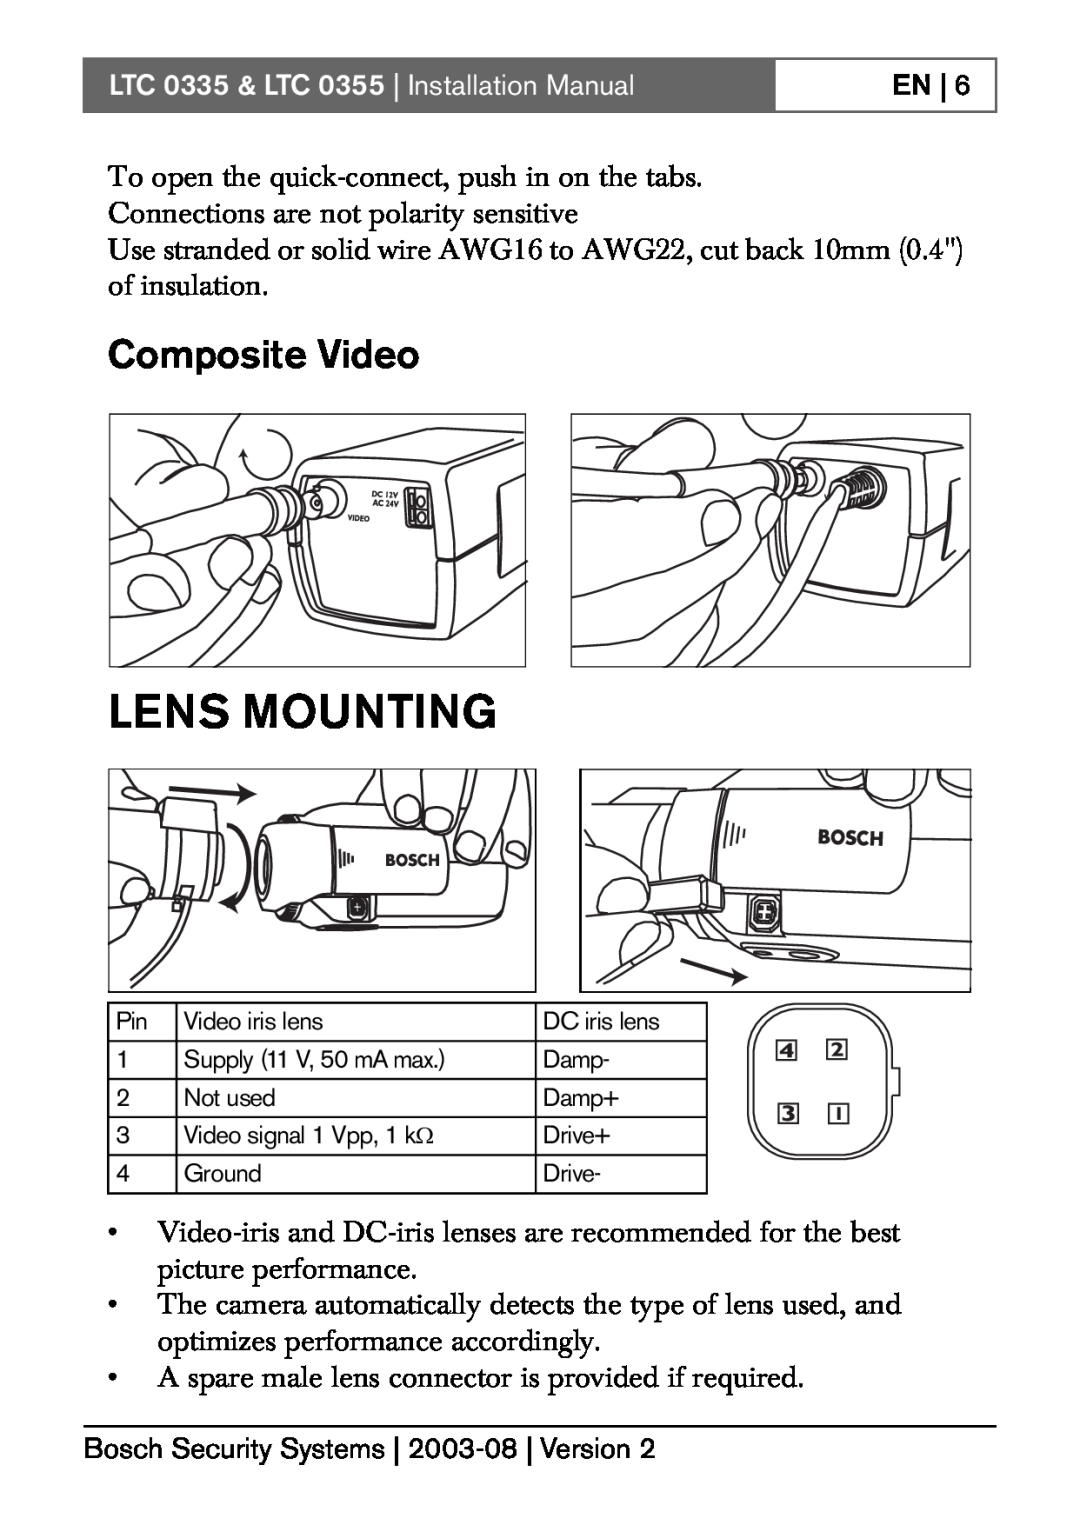 Bosch Appliances installation manual Lens Mounting, Composite Video, LTC 0335 & LTC 0355 Installation Manual 